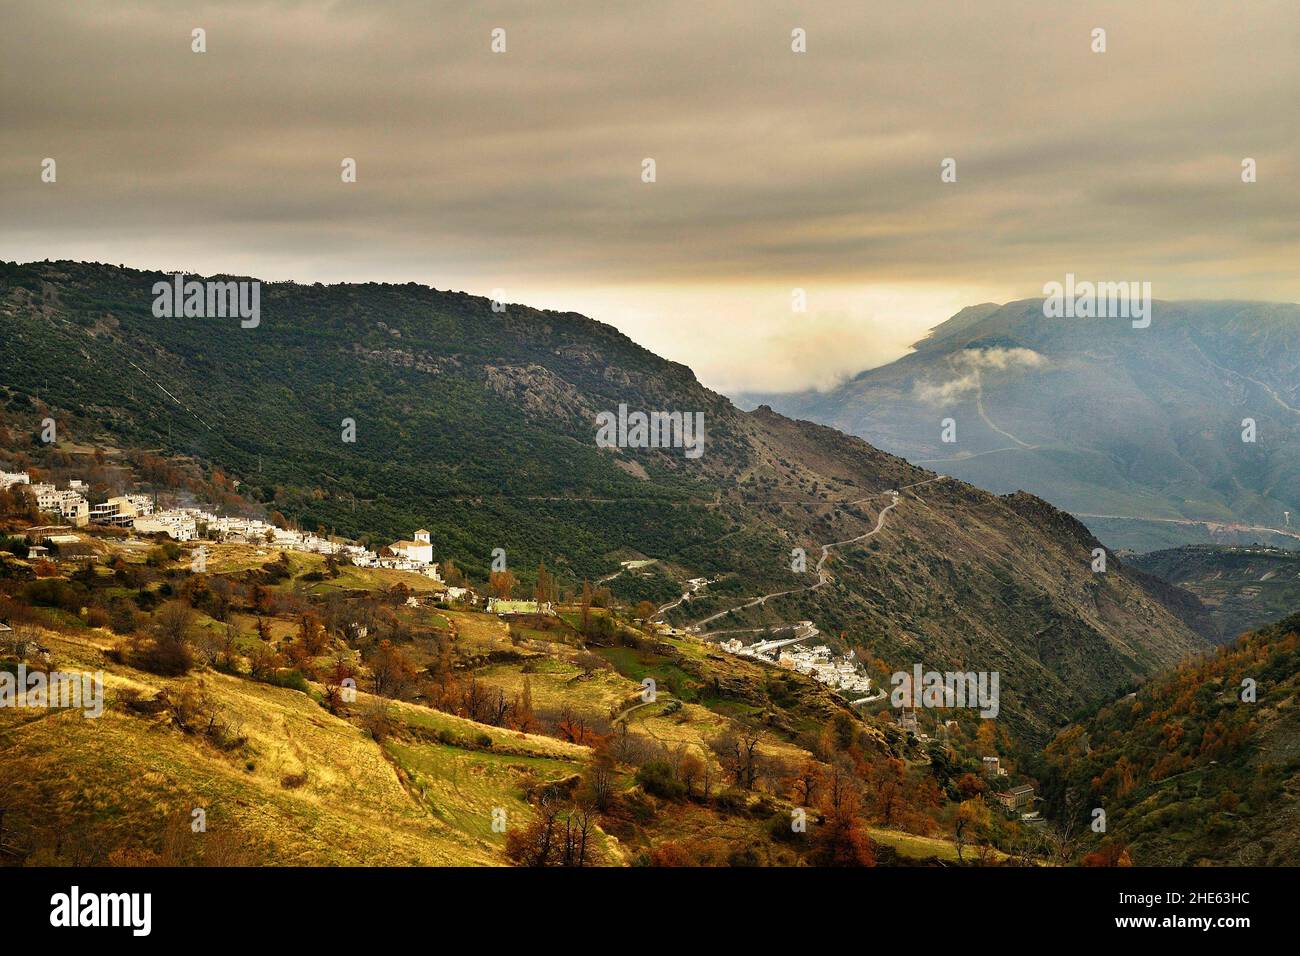 Town of Yator in La Alpujarra Granadina, Sierra Nevada, Spain. Stock Photo